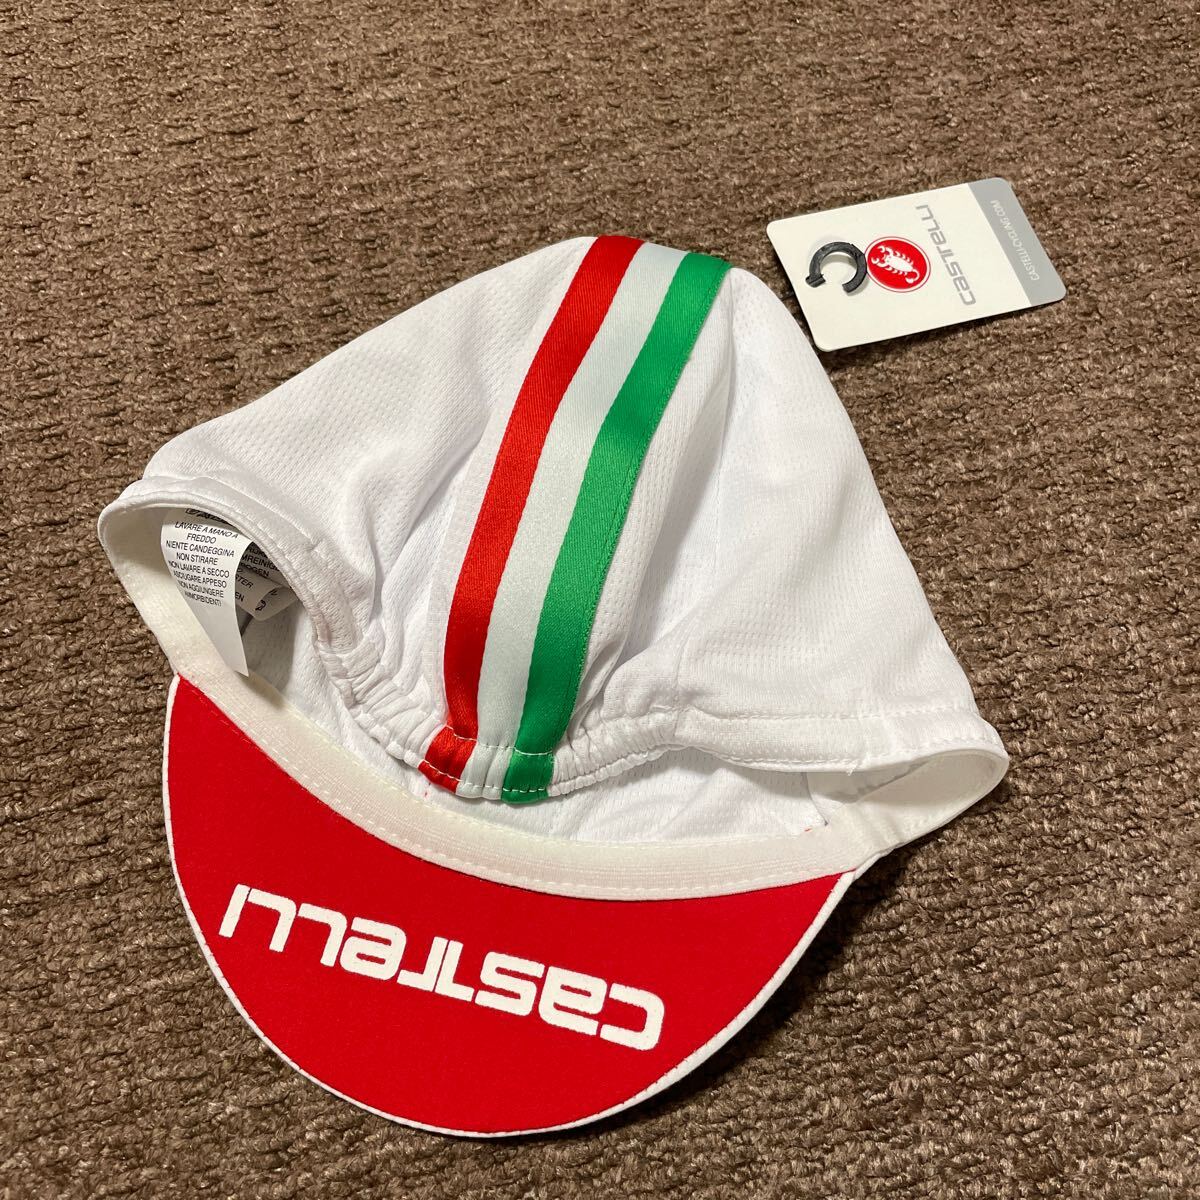 CASTELLI サイクリングキャップ 帽子 カステリ イタリア ロードバイク サイクリング